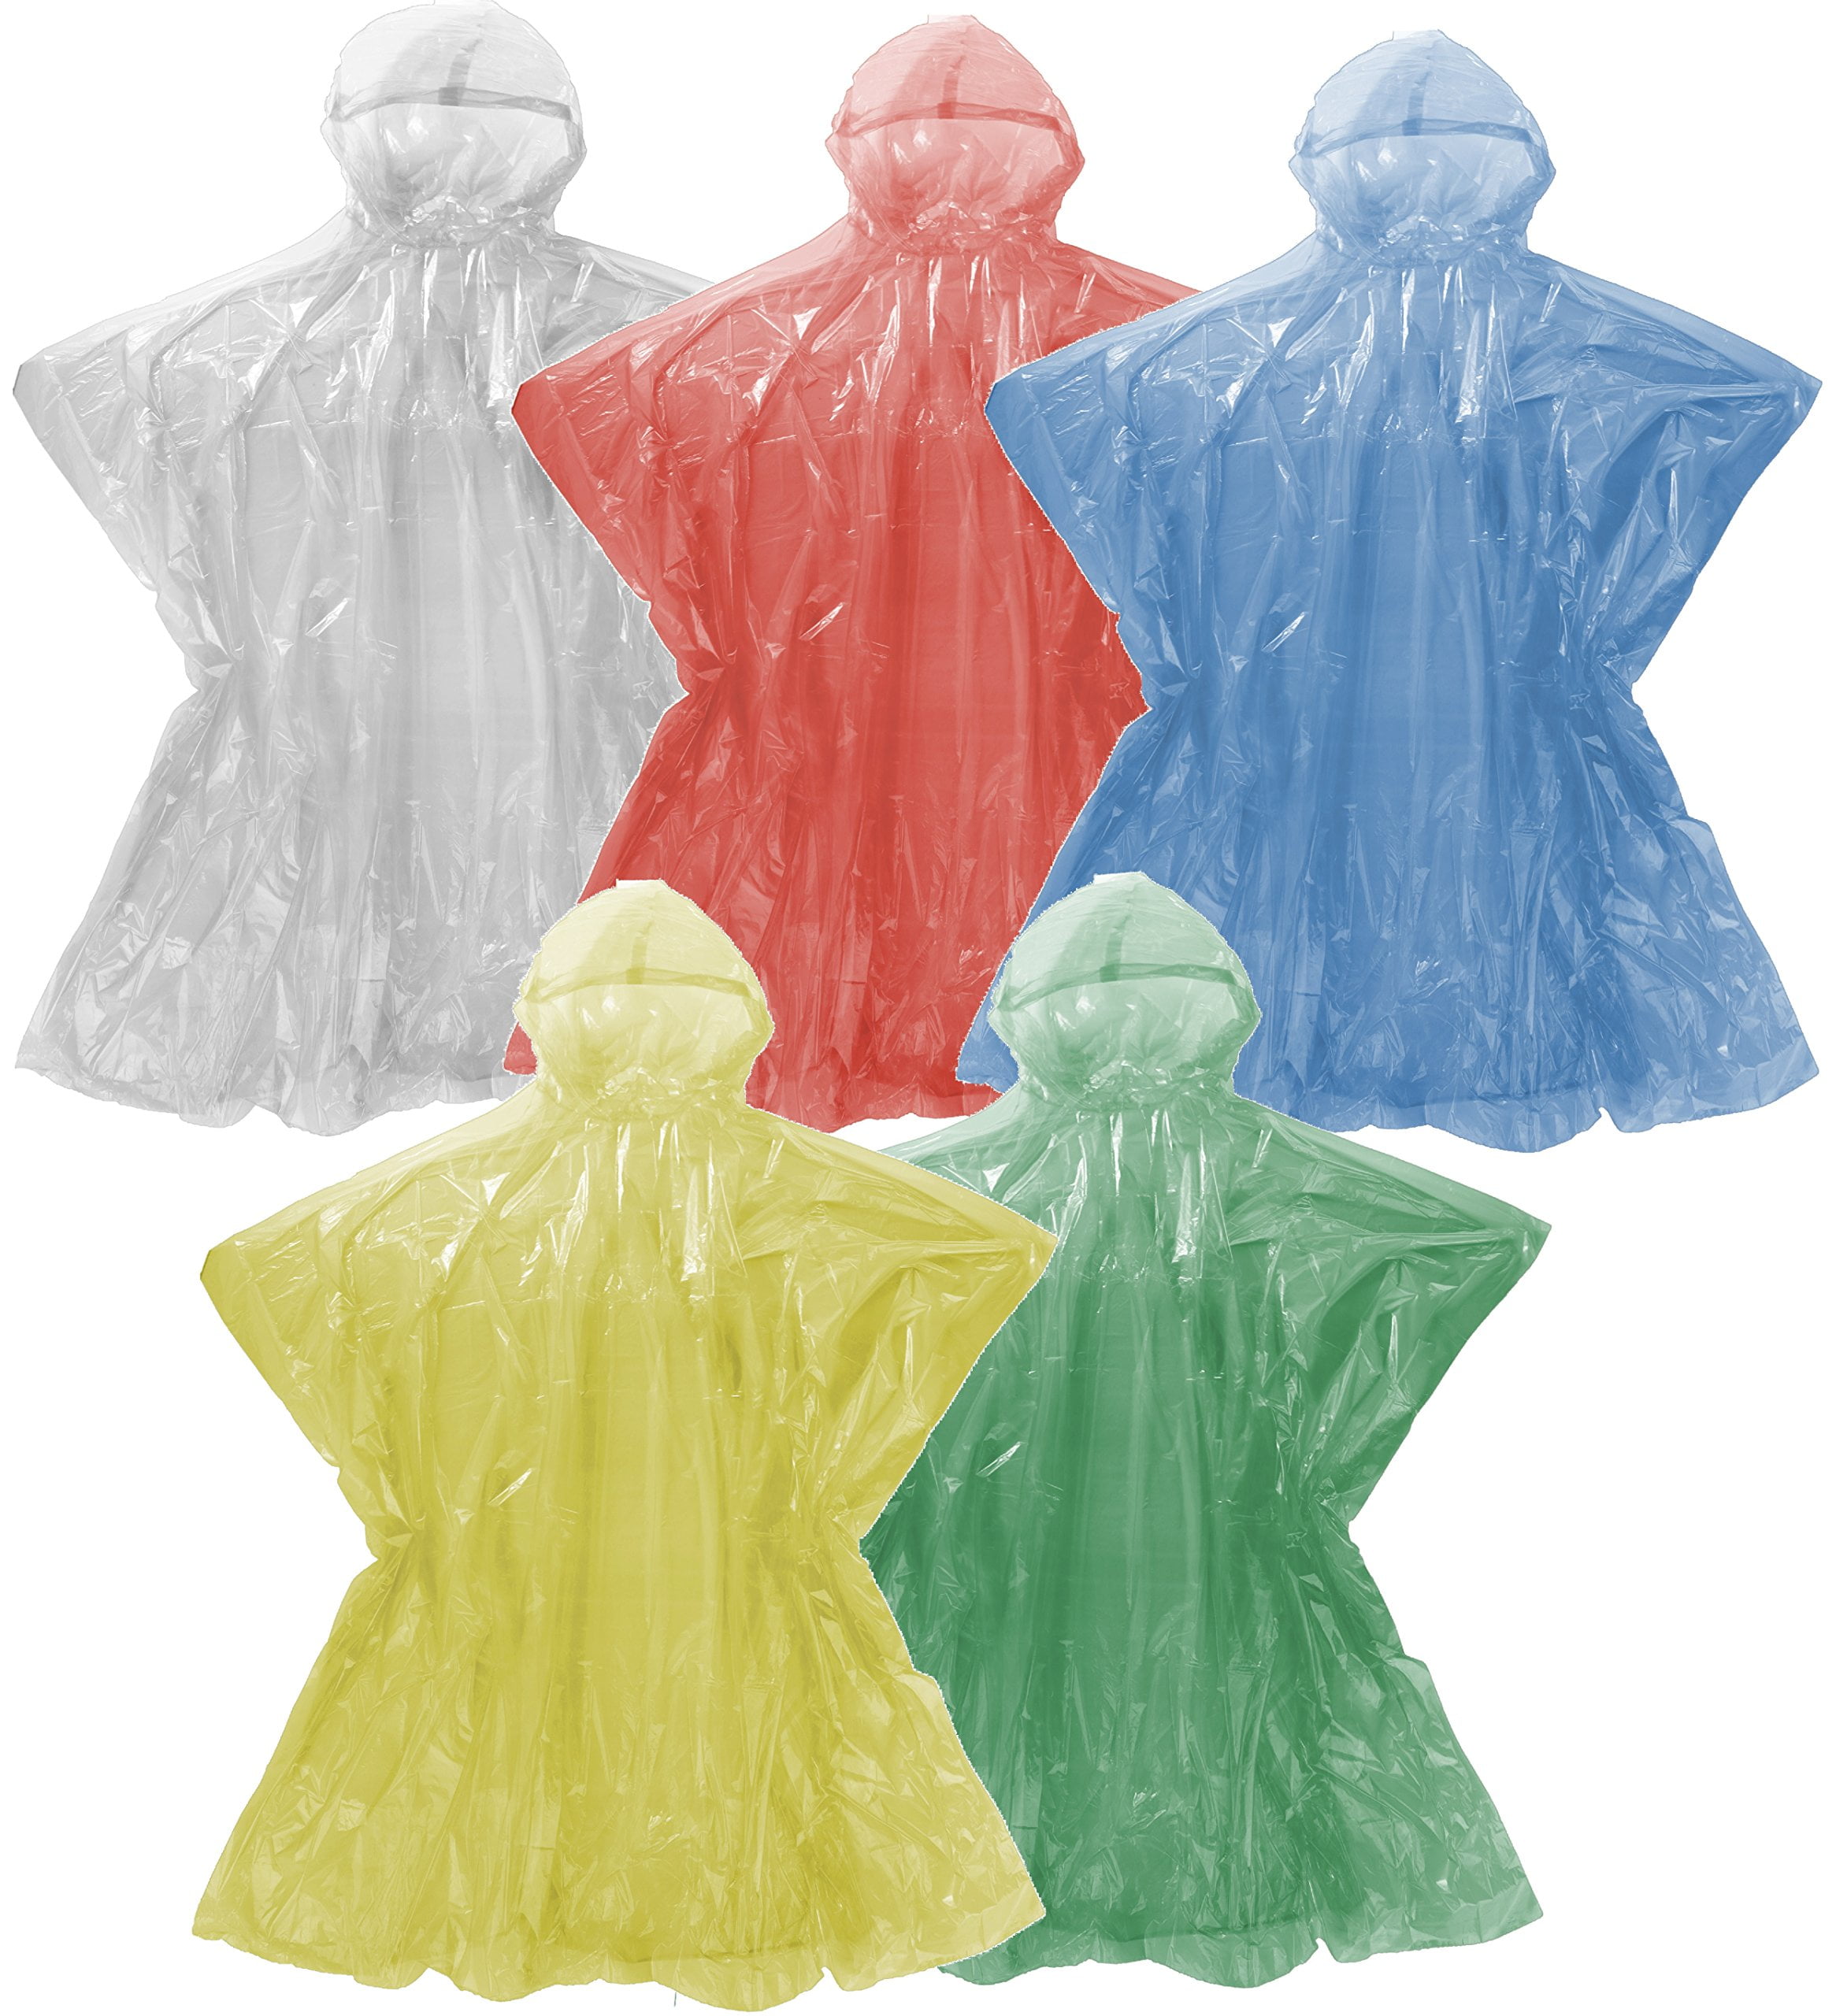 Wealers Rain Poncho Bulk Pack Disposable Ponchos Adults Emergency Raincoat Hood Strings Multi Colors 